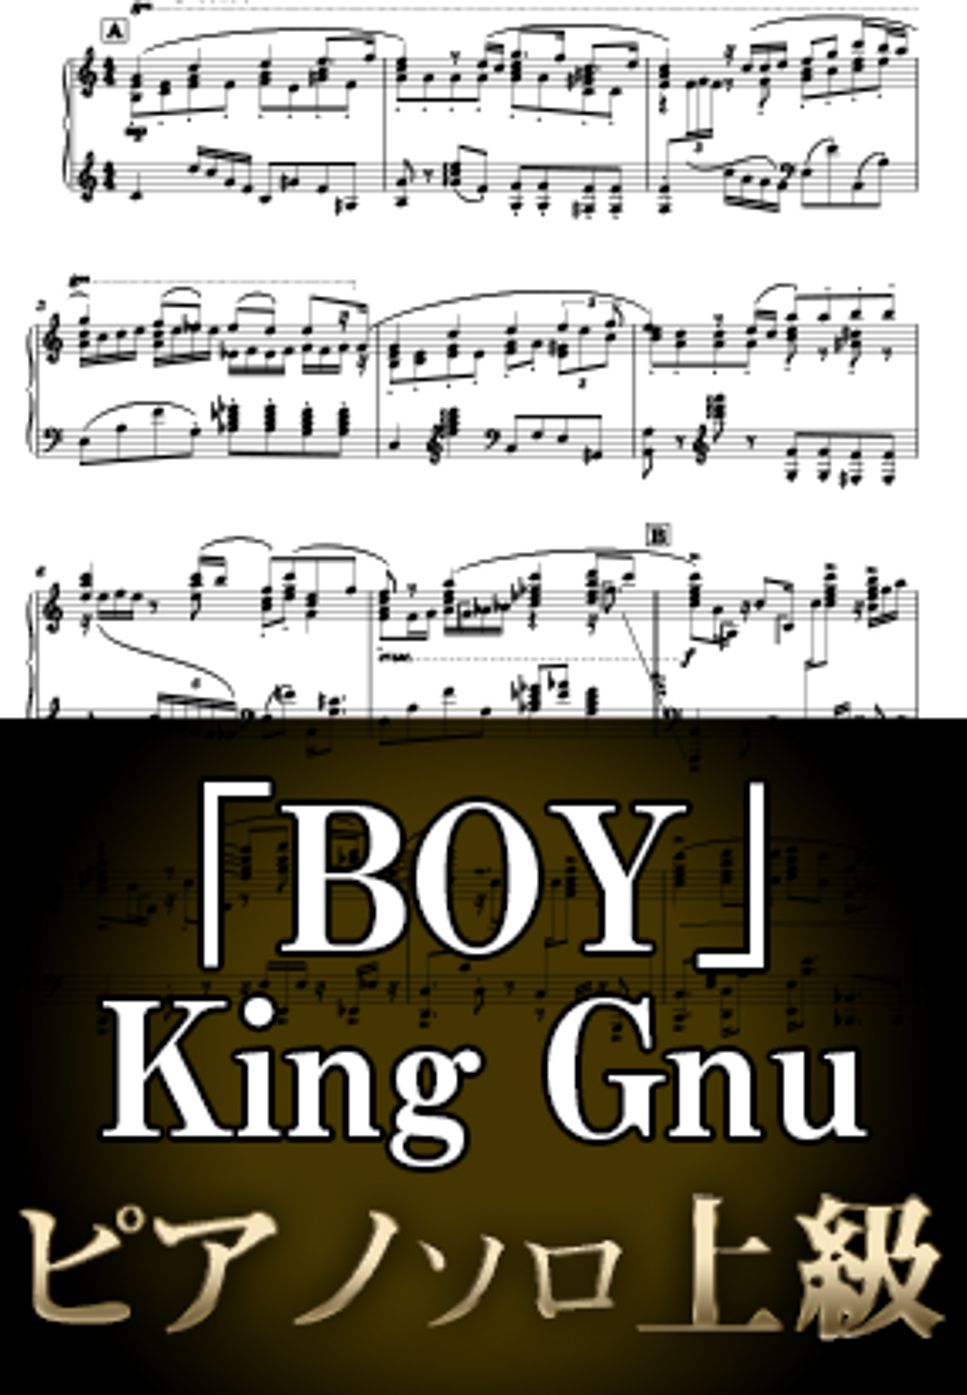 King Gnu - BOY (ピアノソロ上級  / TVアニメ『王様ランキング』OP) by Suu